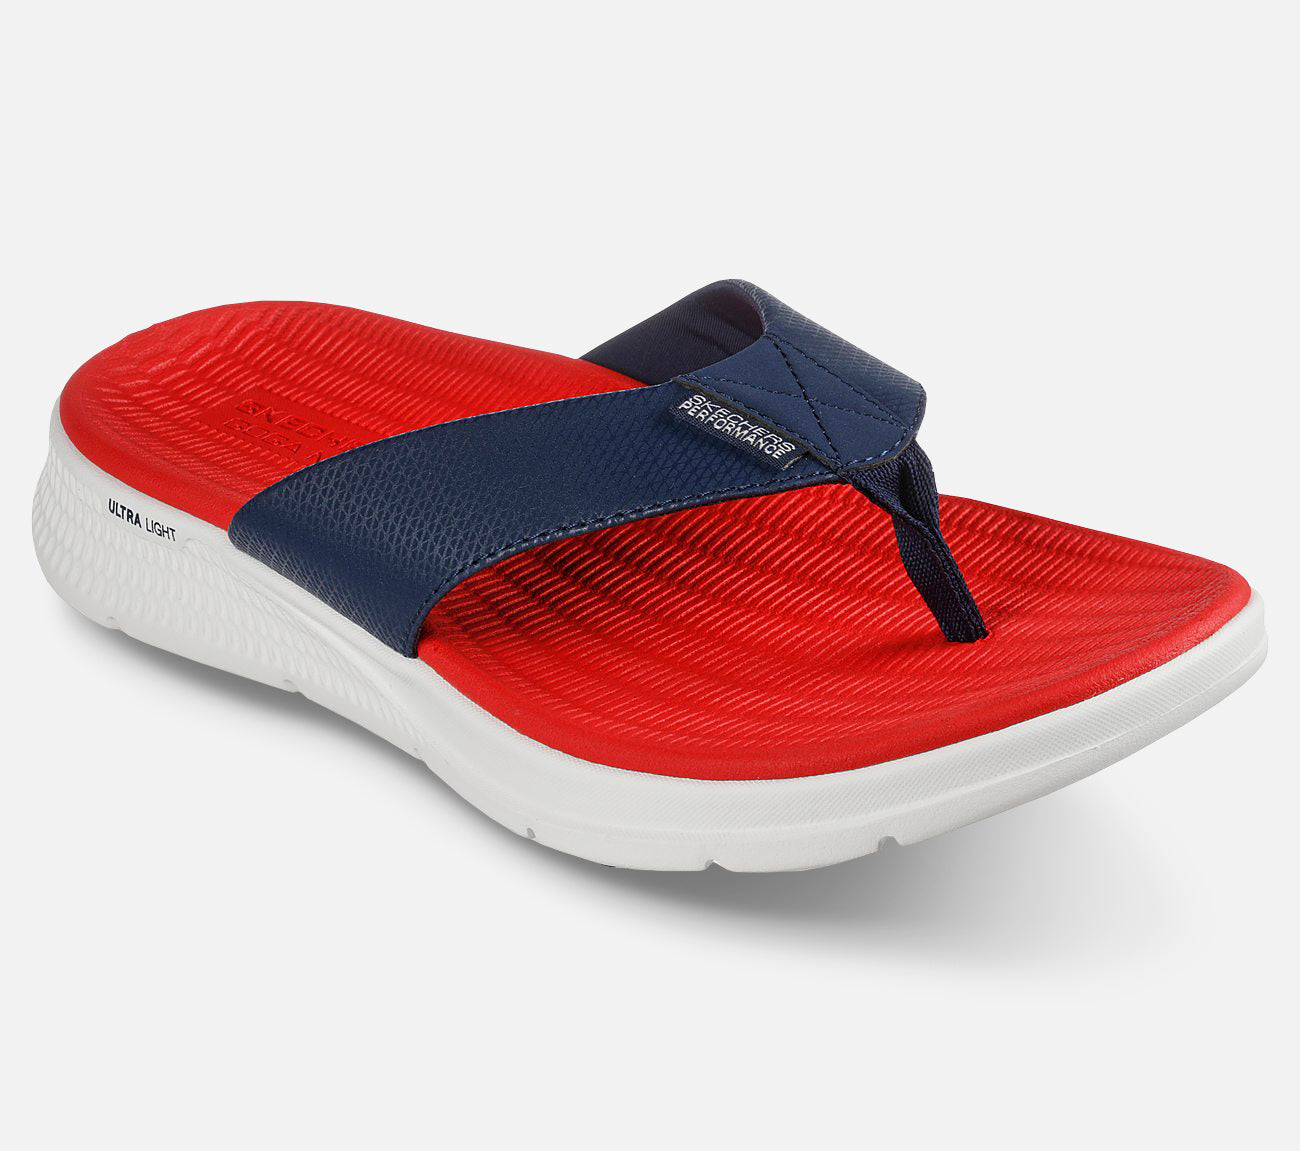 GO Consistent Sandal - Synthwave Sandal Skechers